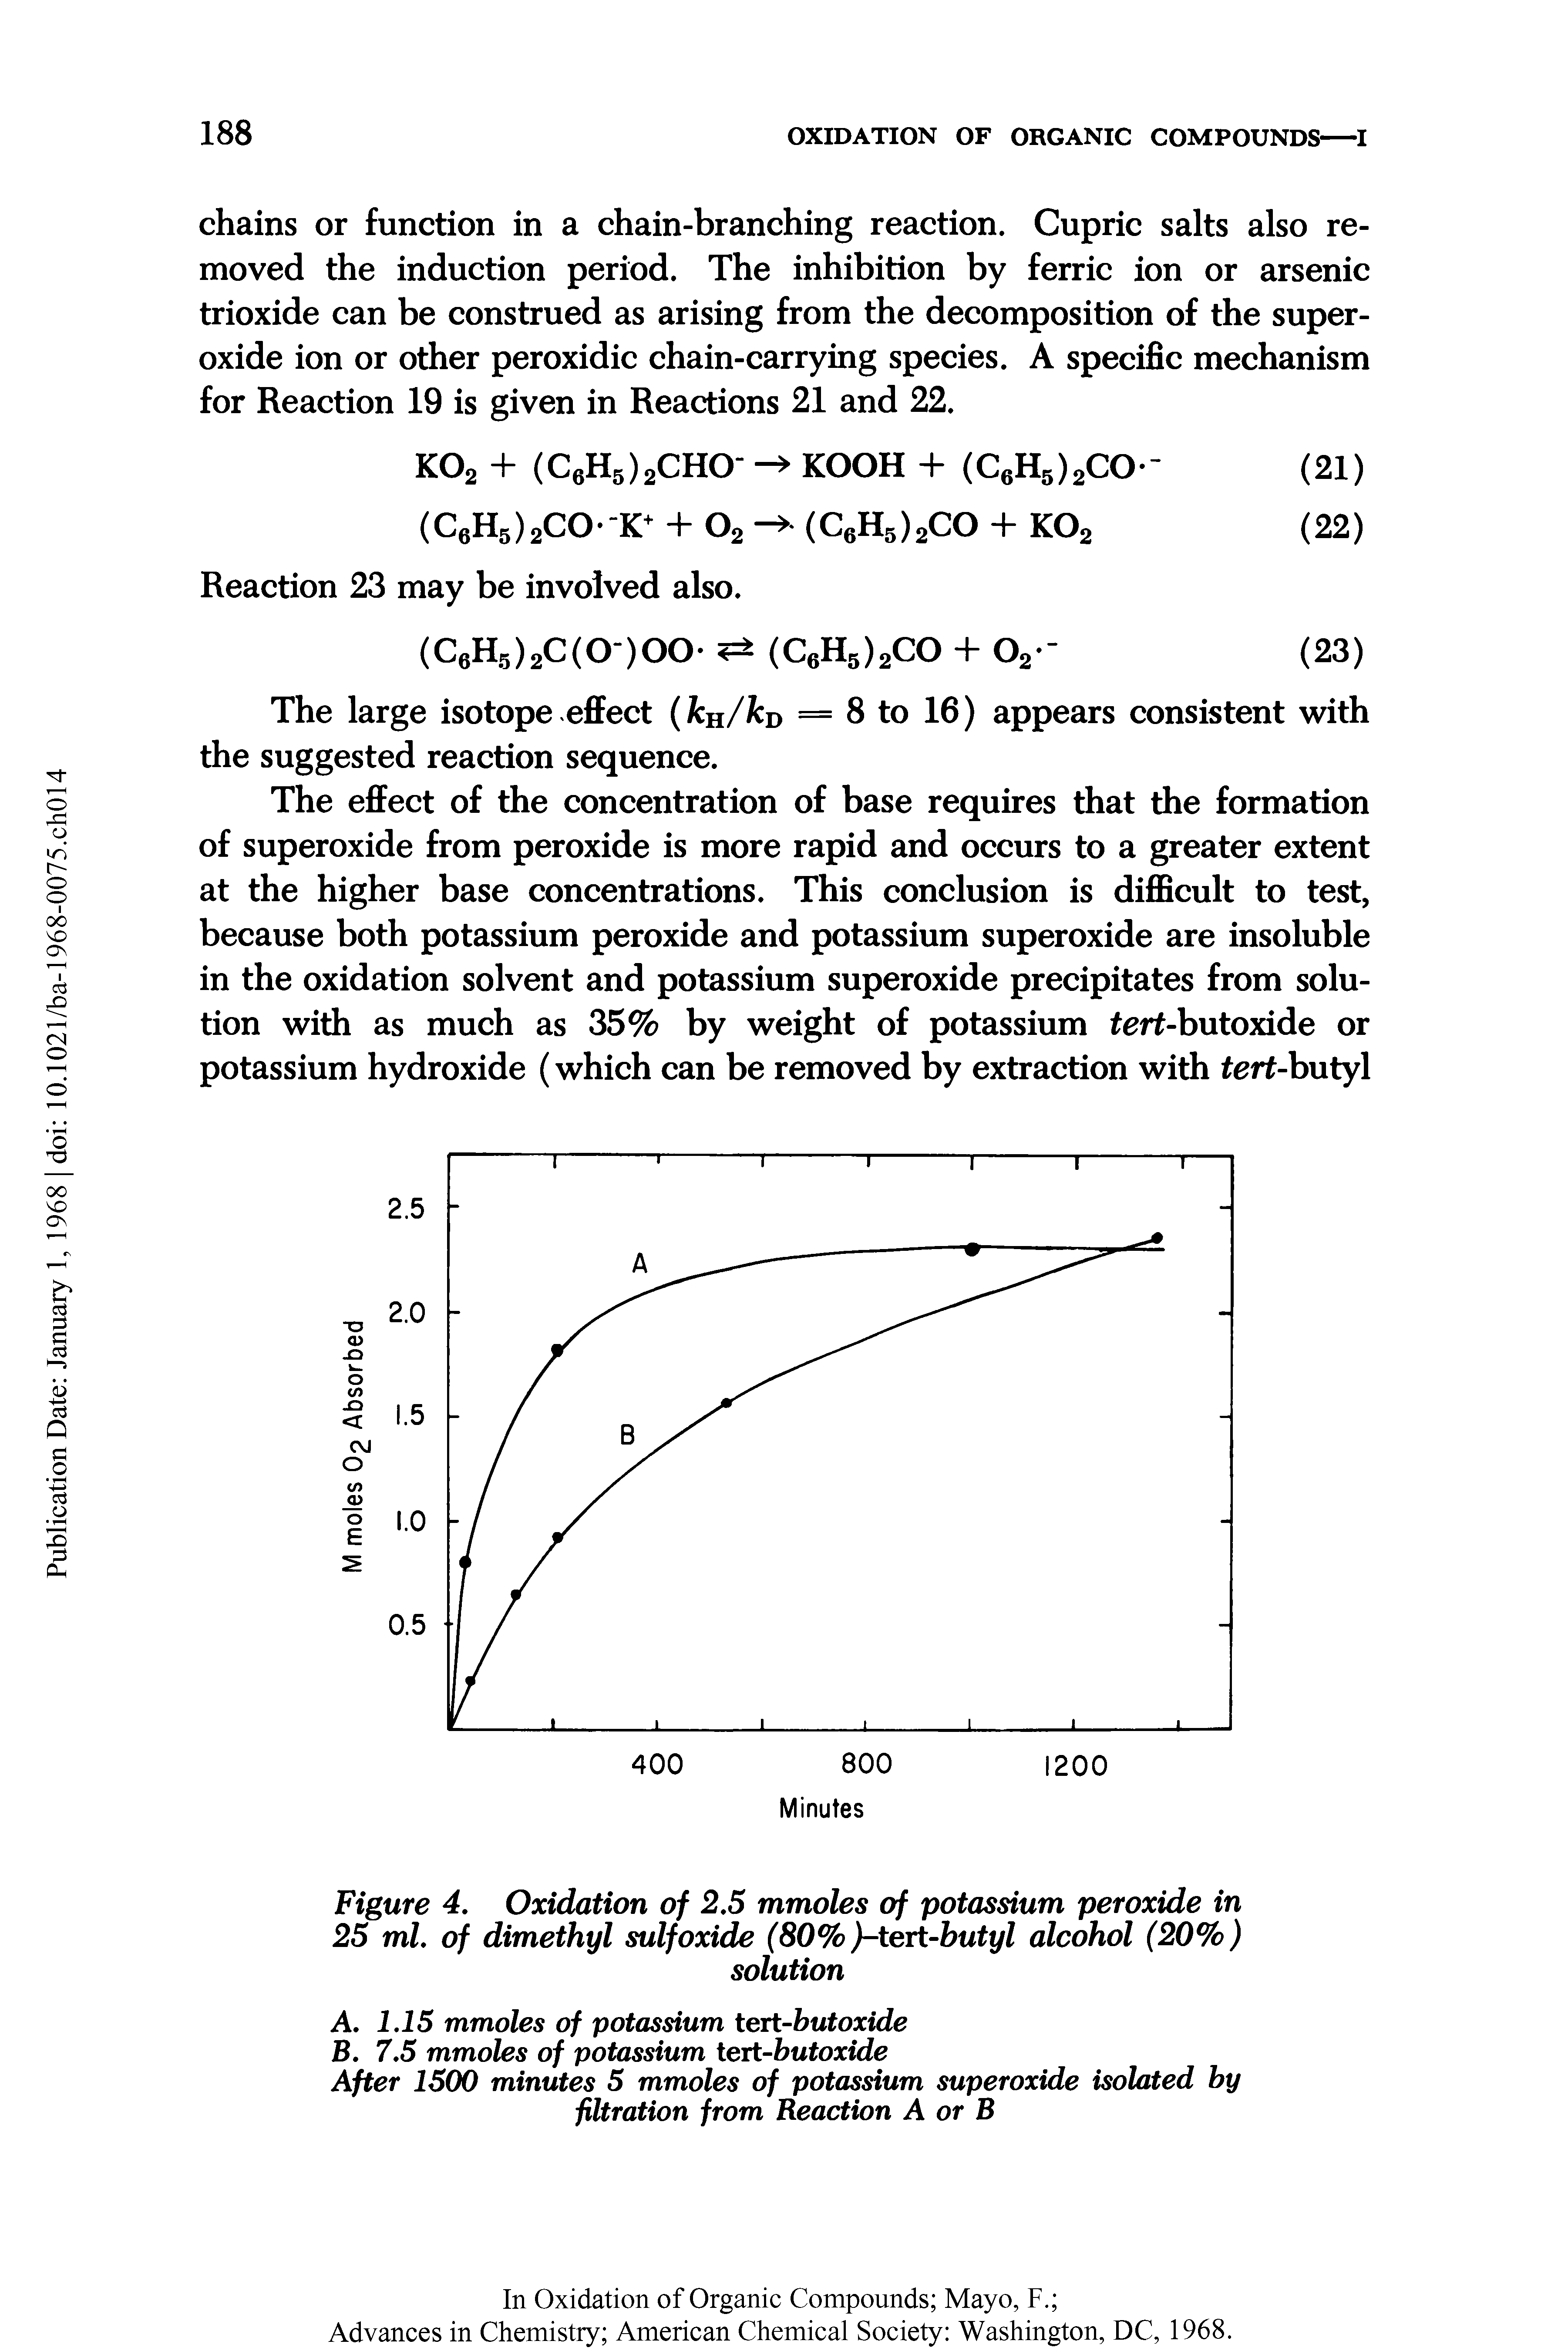 Figure 4. Oxidation of 2.5 mmoles of potassium peroxide in 25 ml. of dimethyl sulfoxide (80% )-tert-butyl alcohol (20%)...